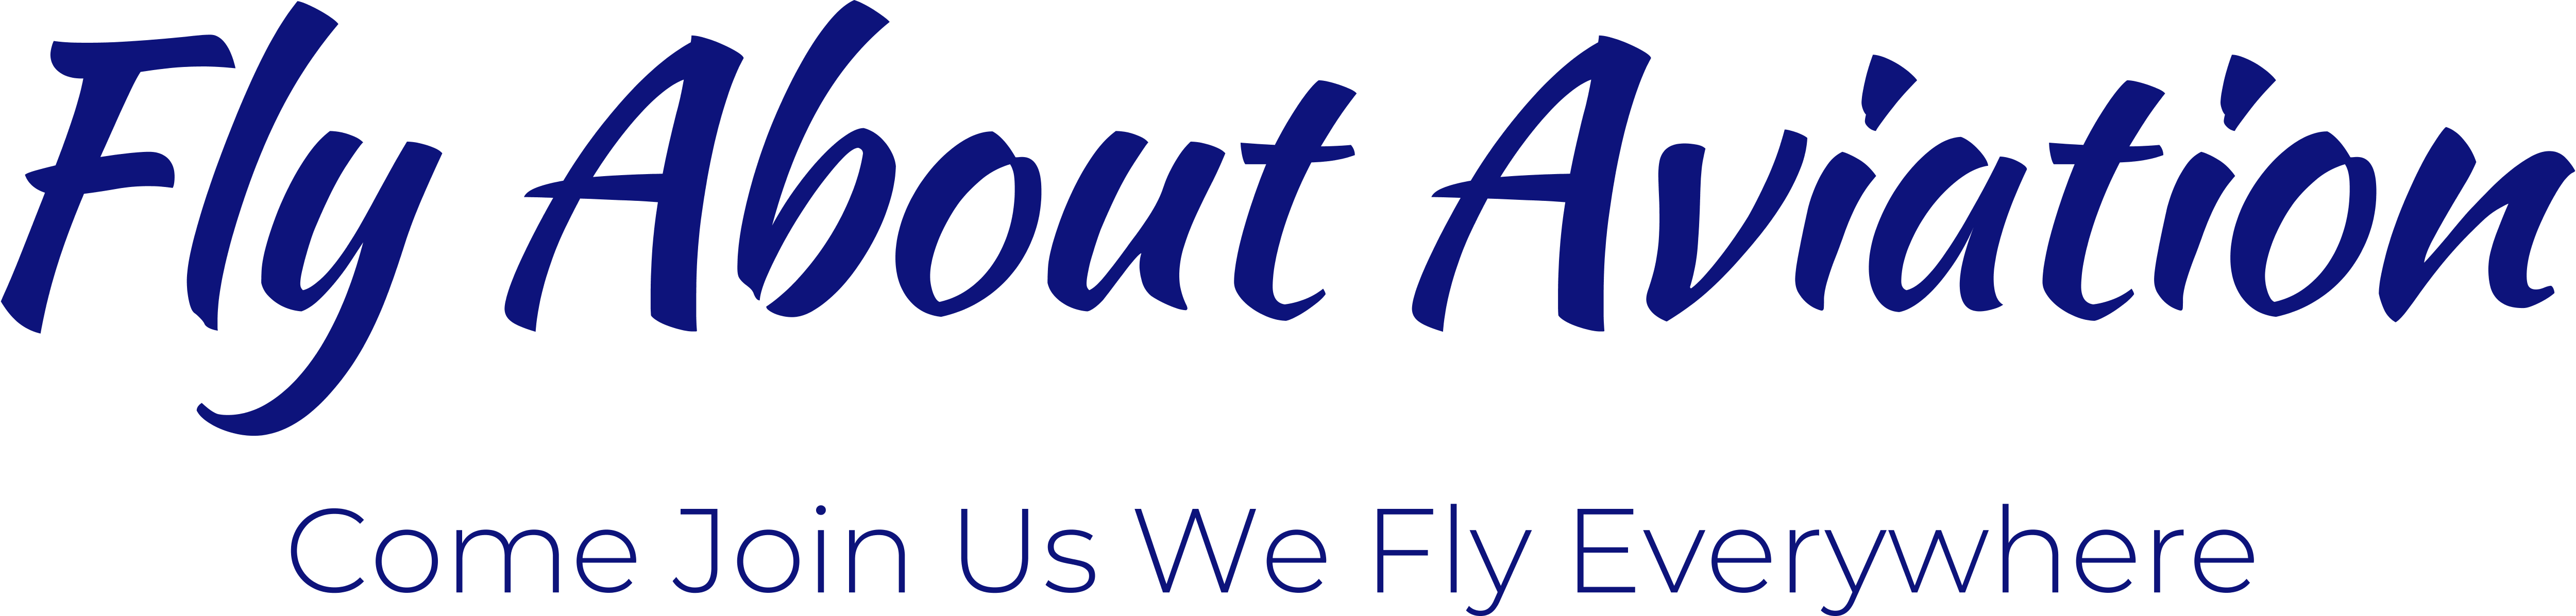 Fly About Aviation Ltd